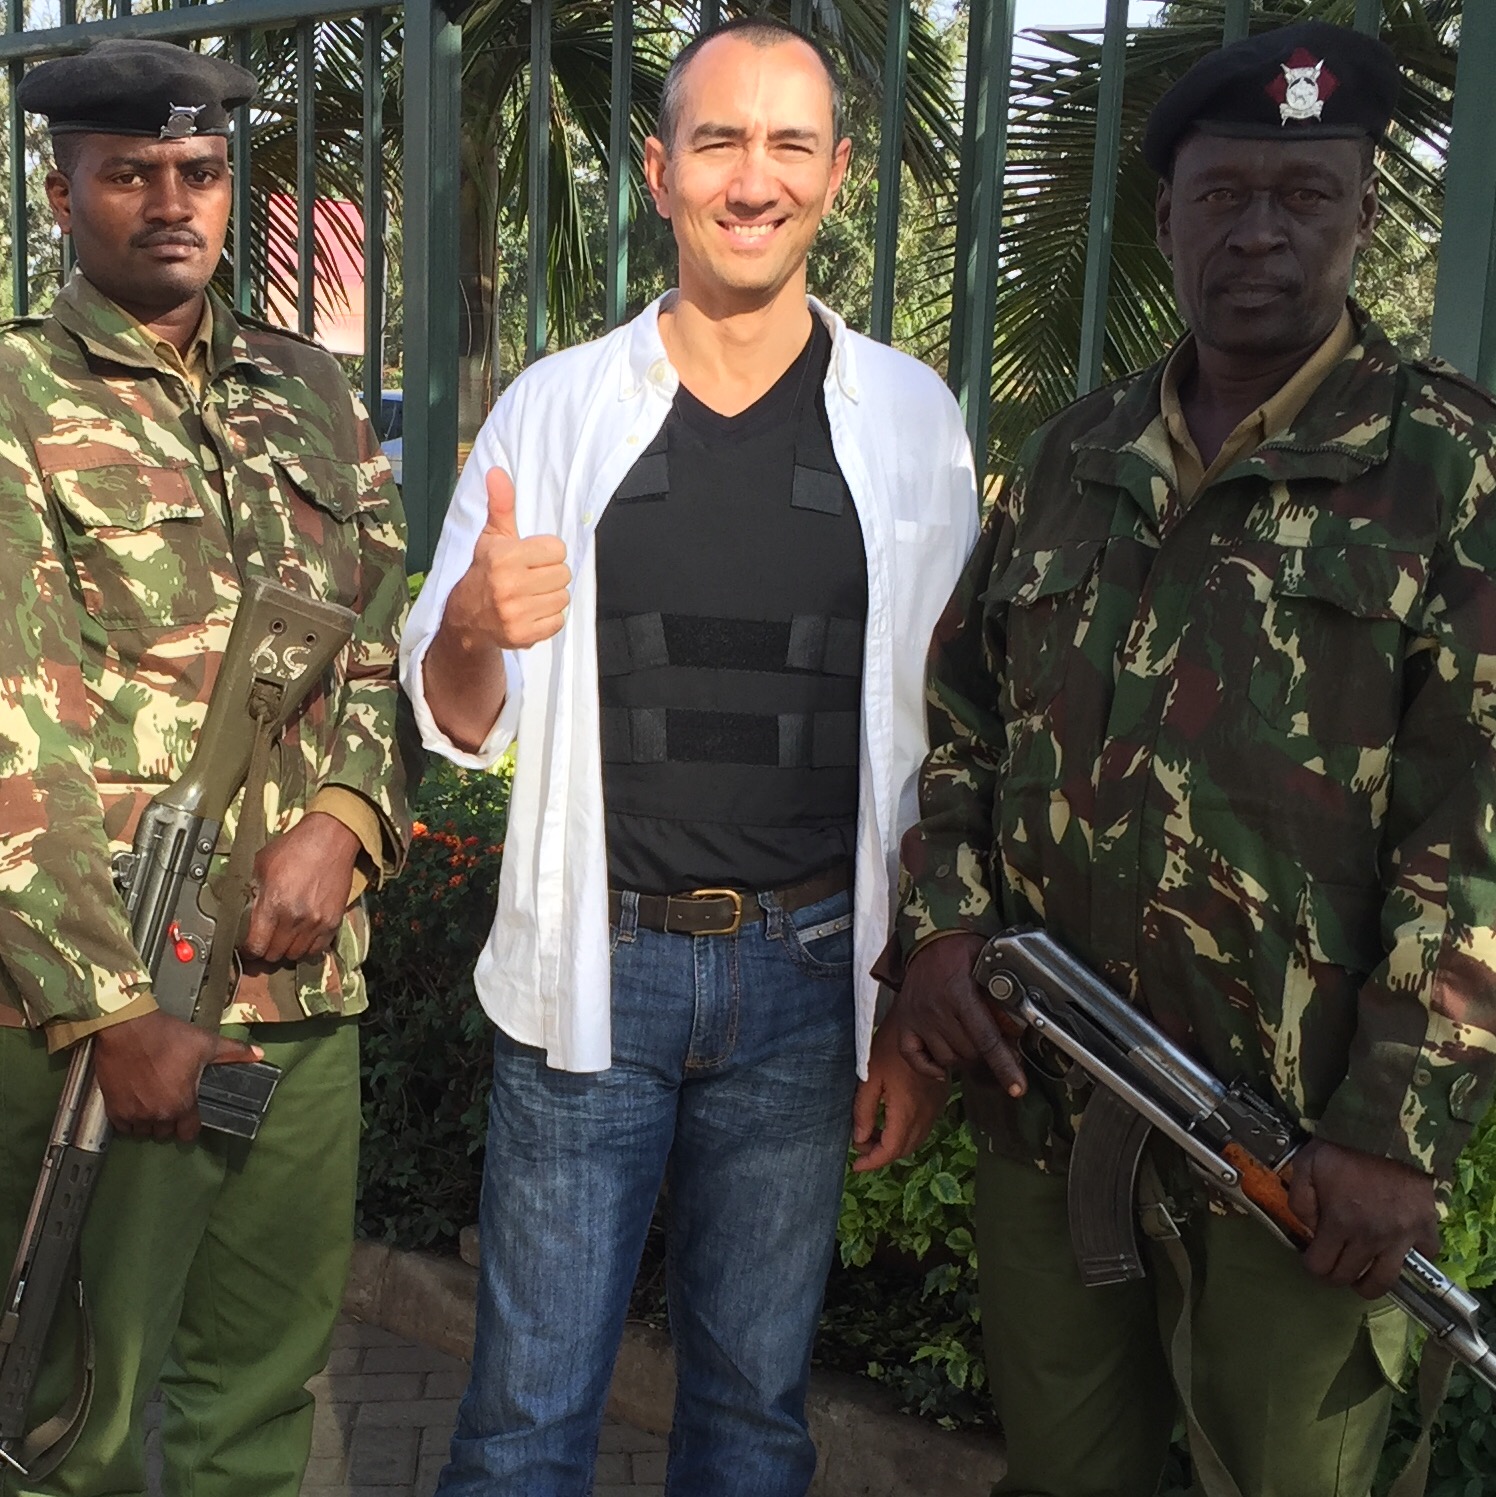 On the job in Nairobi, Kenya